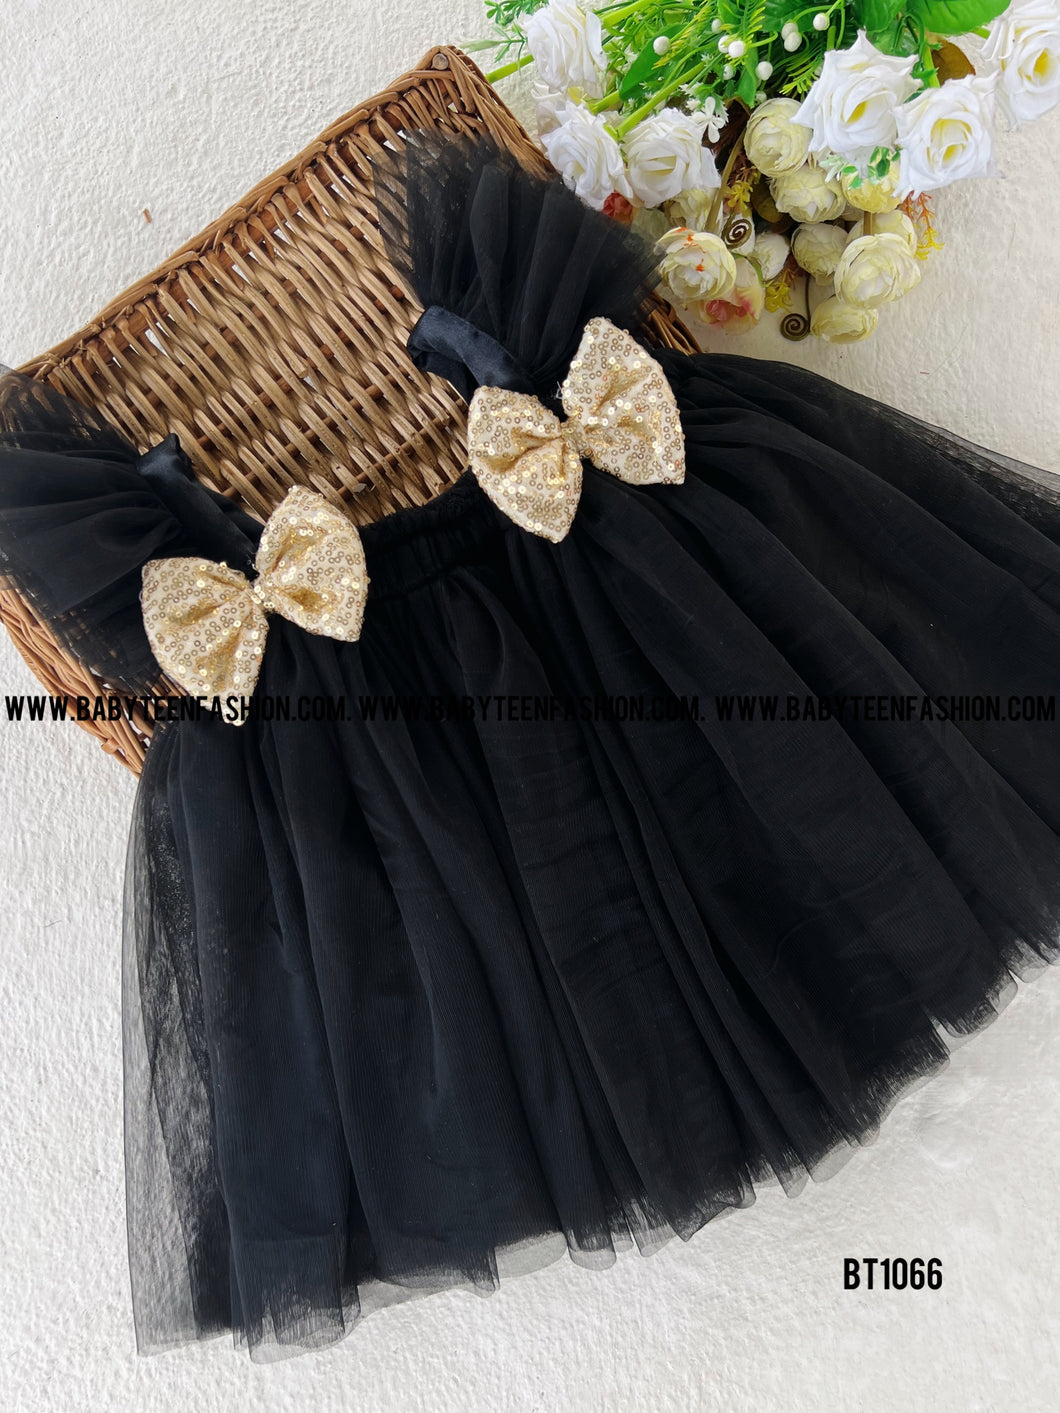 BT1066 Midnight Glitz Bow Dress – A Touch of Glamour